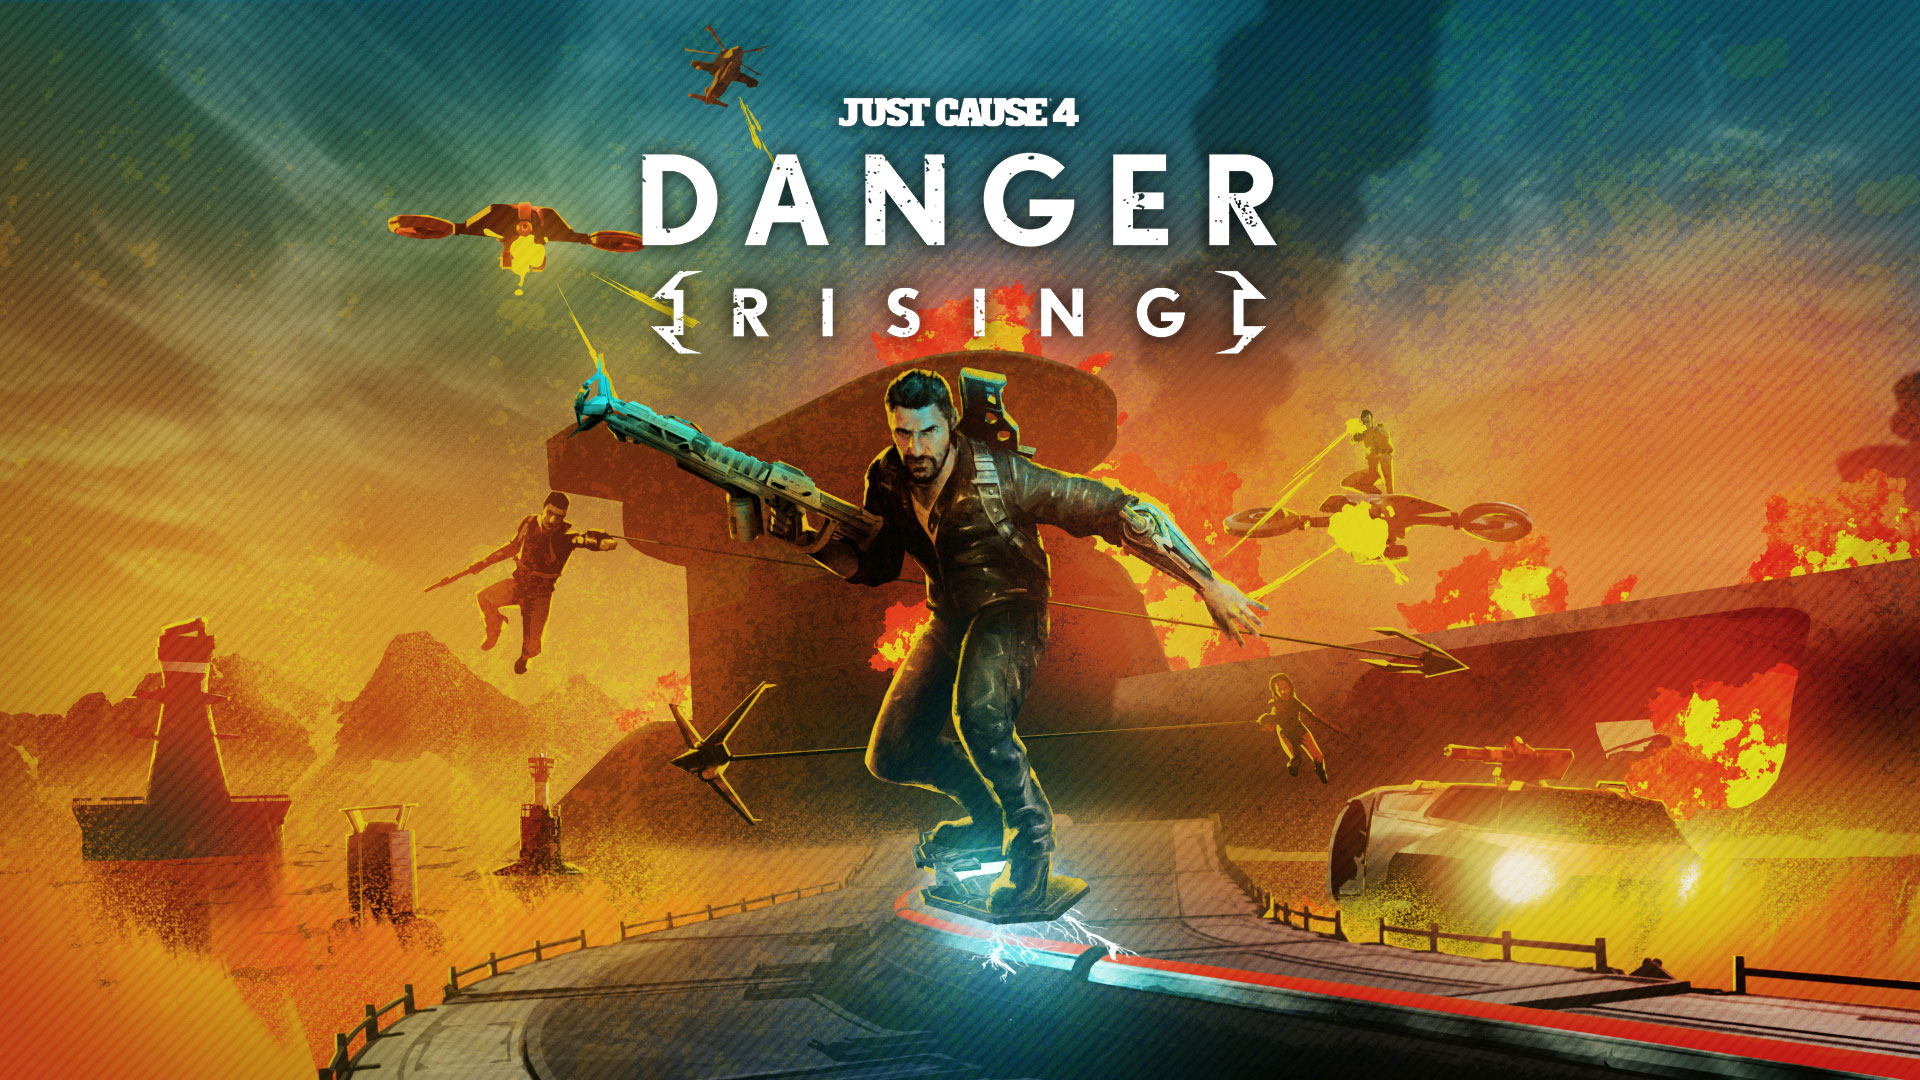 Just_Cause_4_Danger_Rising_Super_Hero_Art_1920x1080.jpg